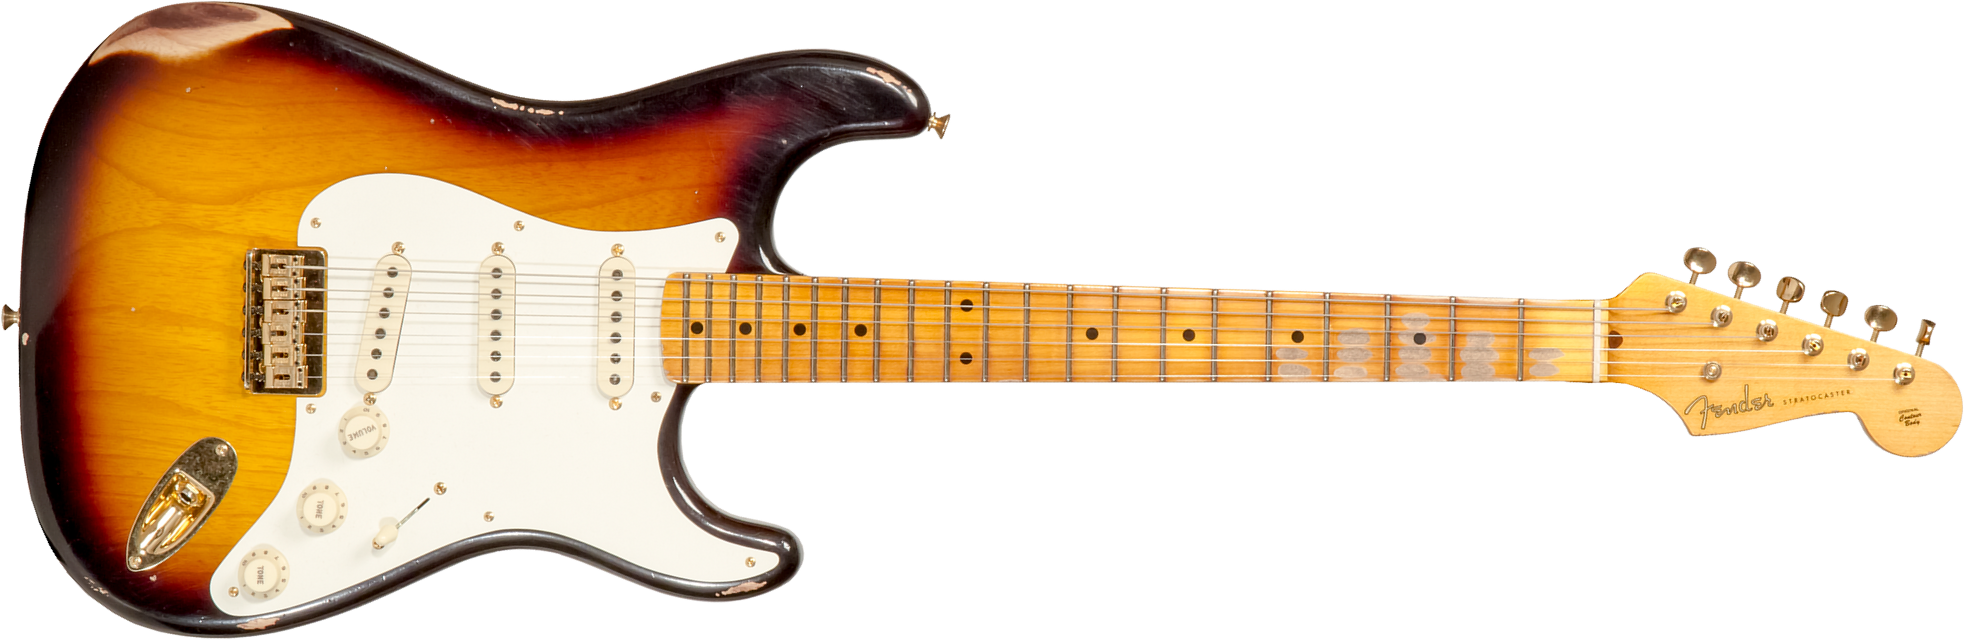 Fender Custom Shop Strat 1956 Hardtail Gold Hardware 3s Ht Mn #cz565119 - Relic Faded 2-color Sunburst - Elektrische gitaar in Str-vorm - Main picture